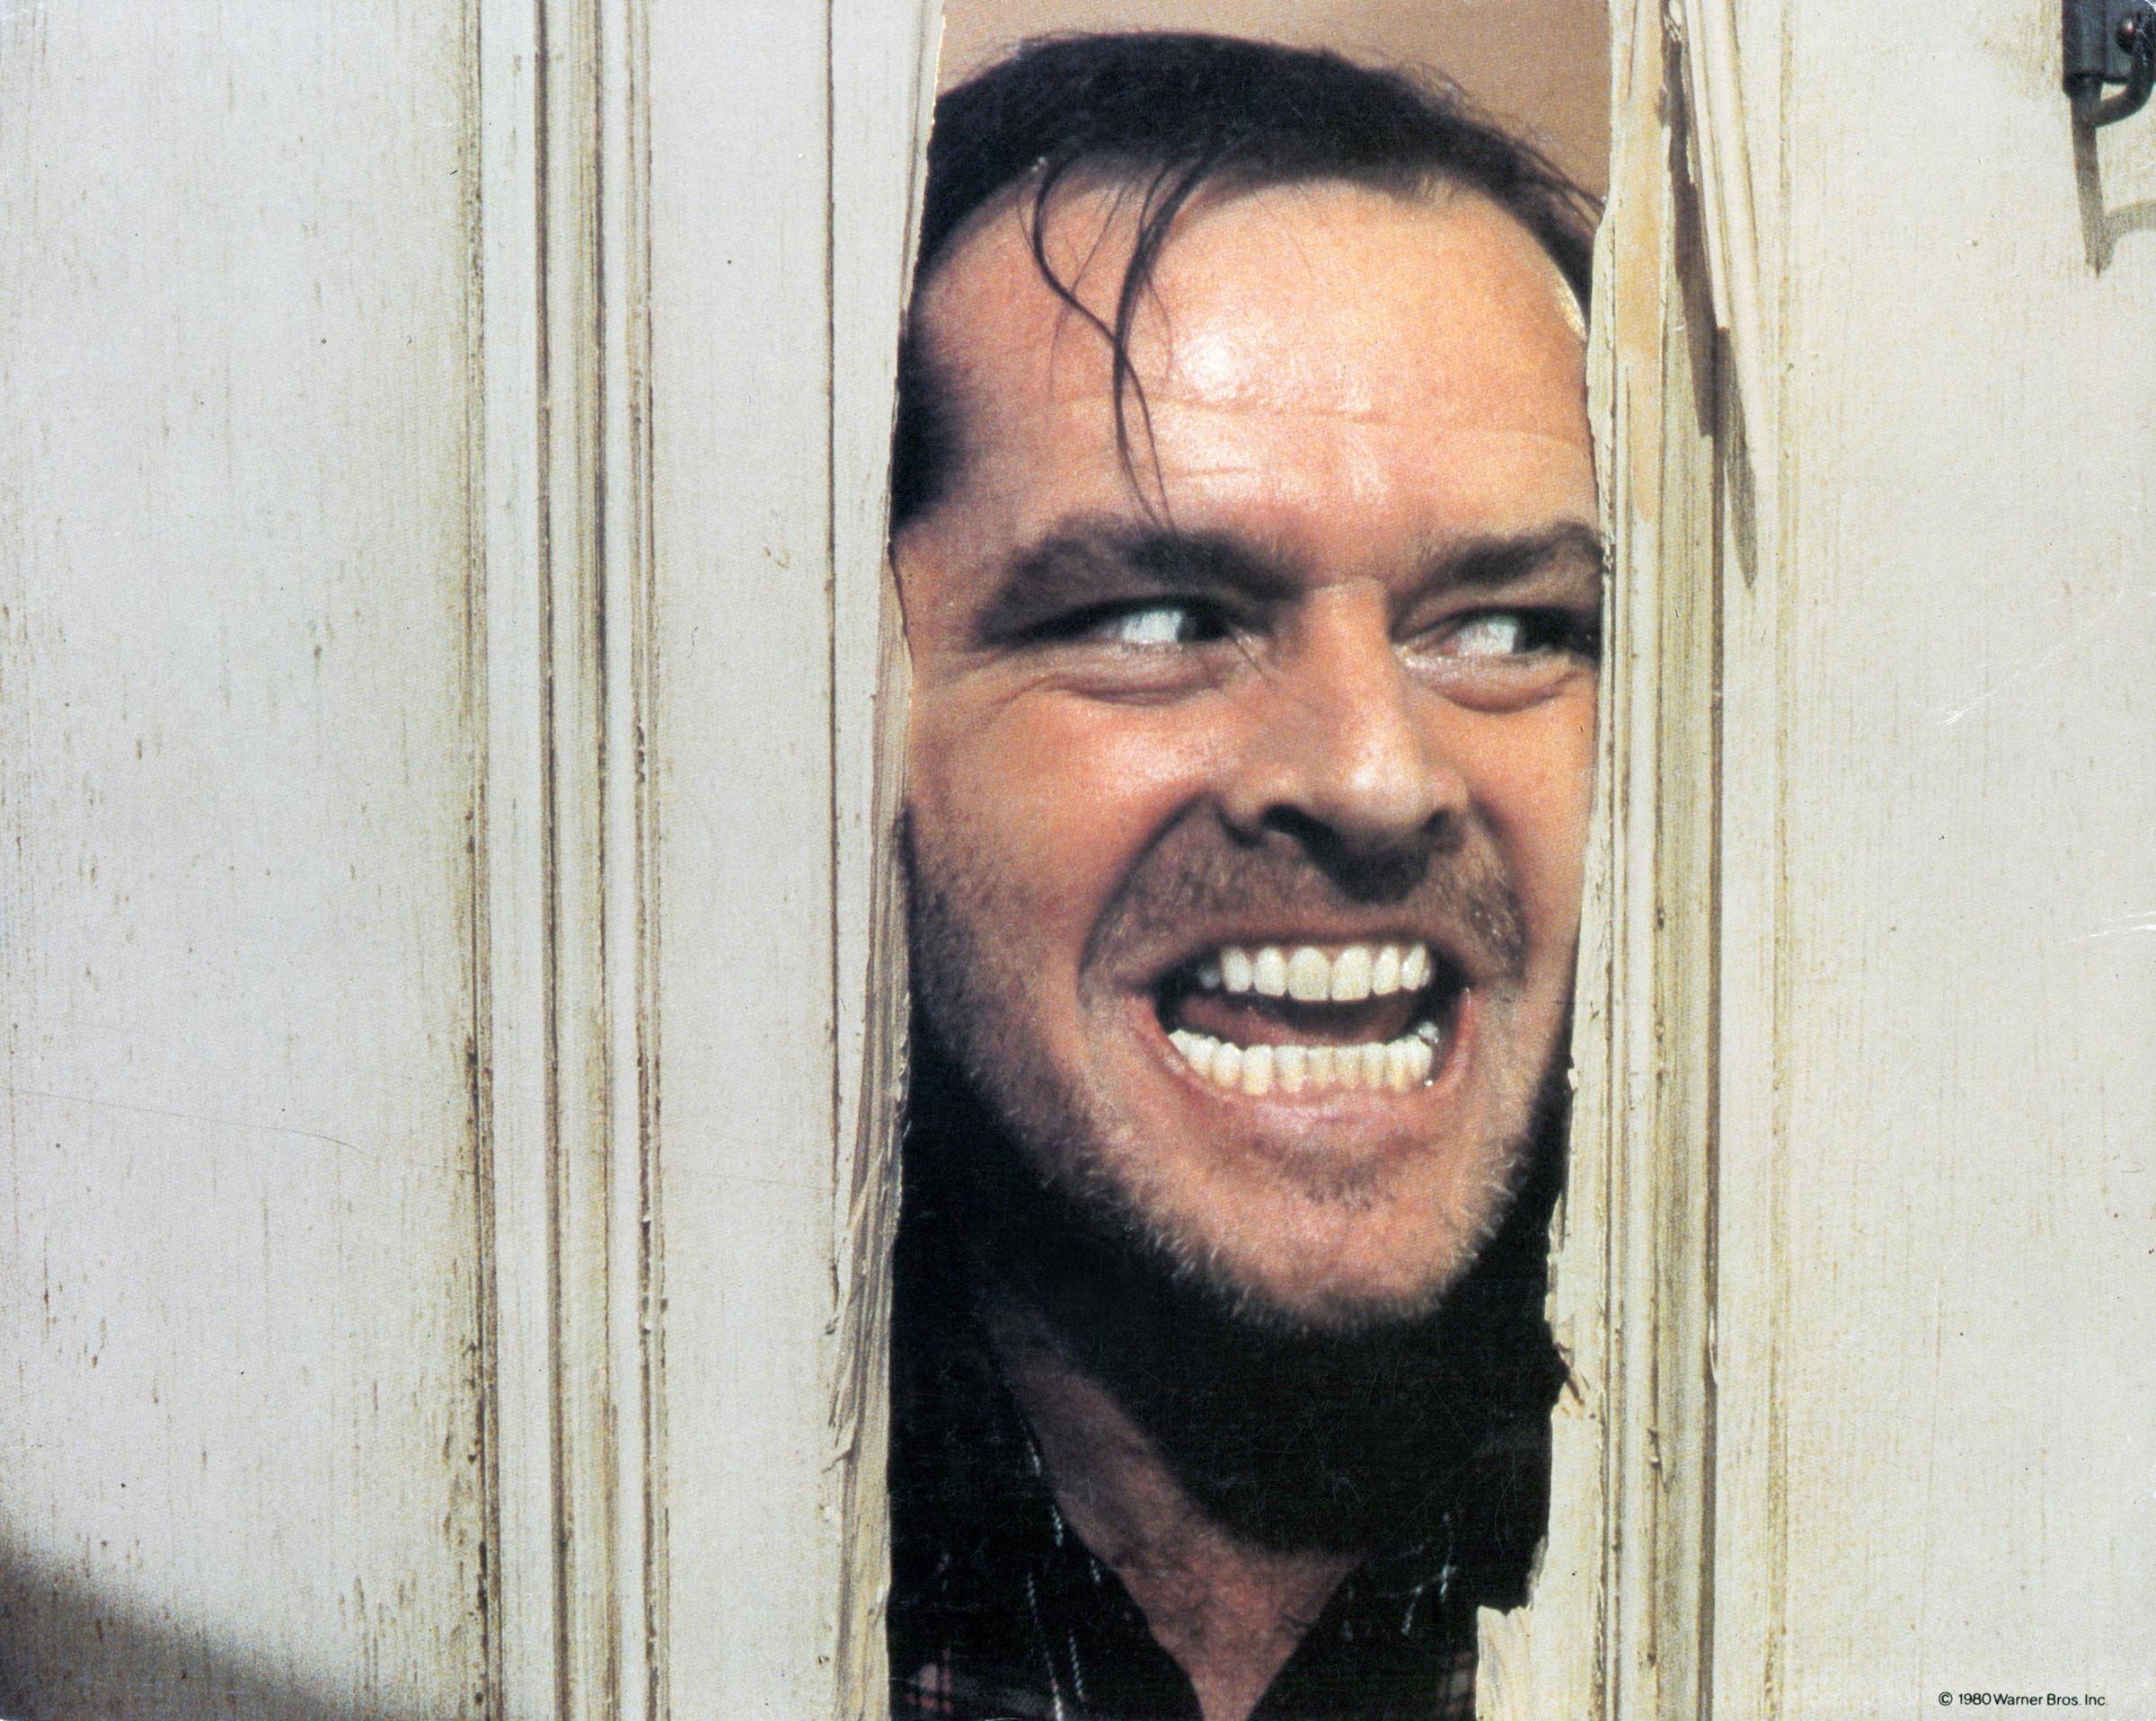 Jack Nicholson am Set von "The Shining", 1980 | Quelle: Getty Images